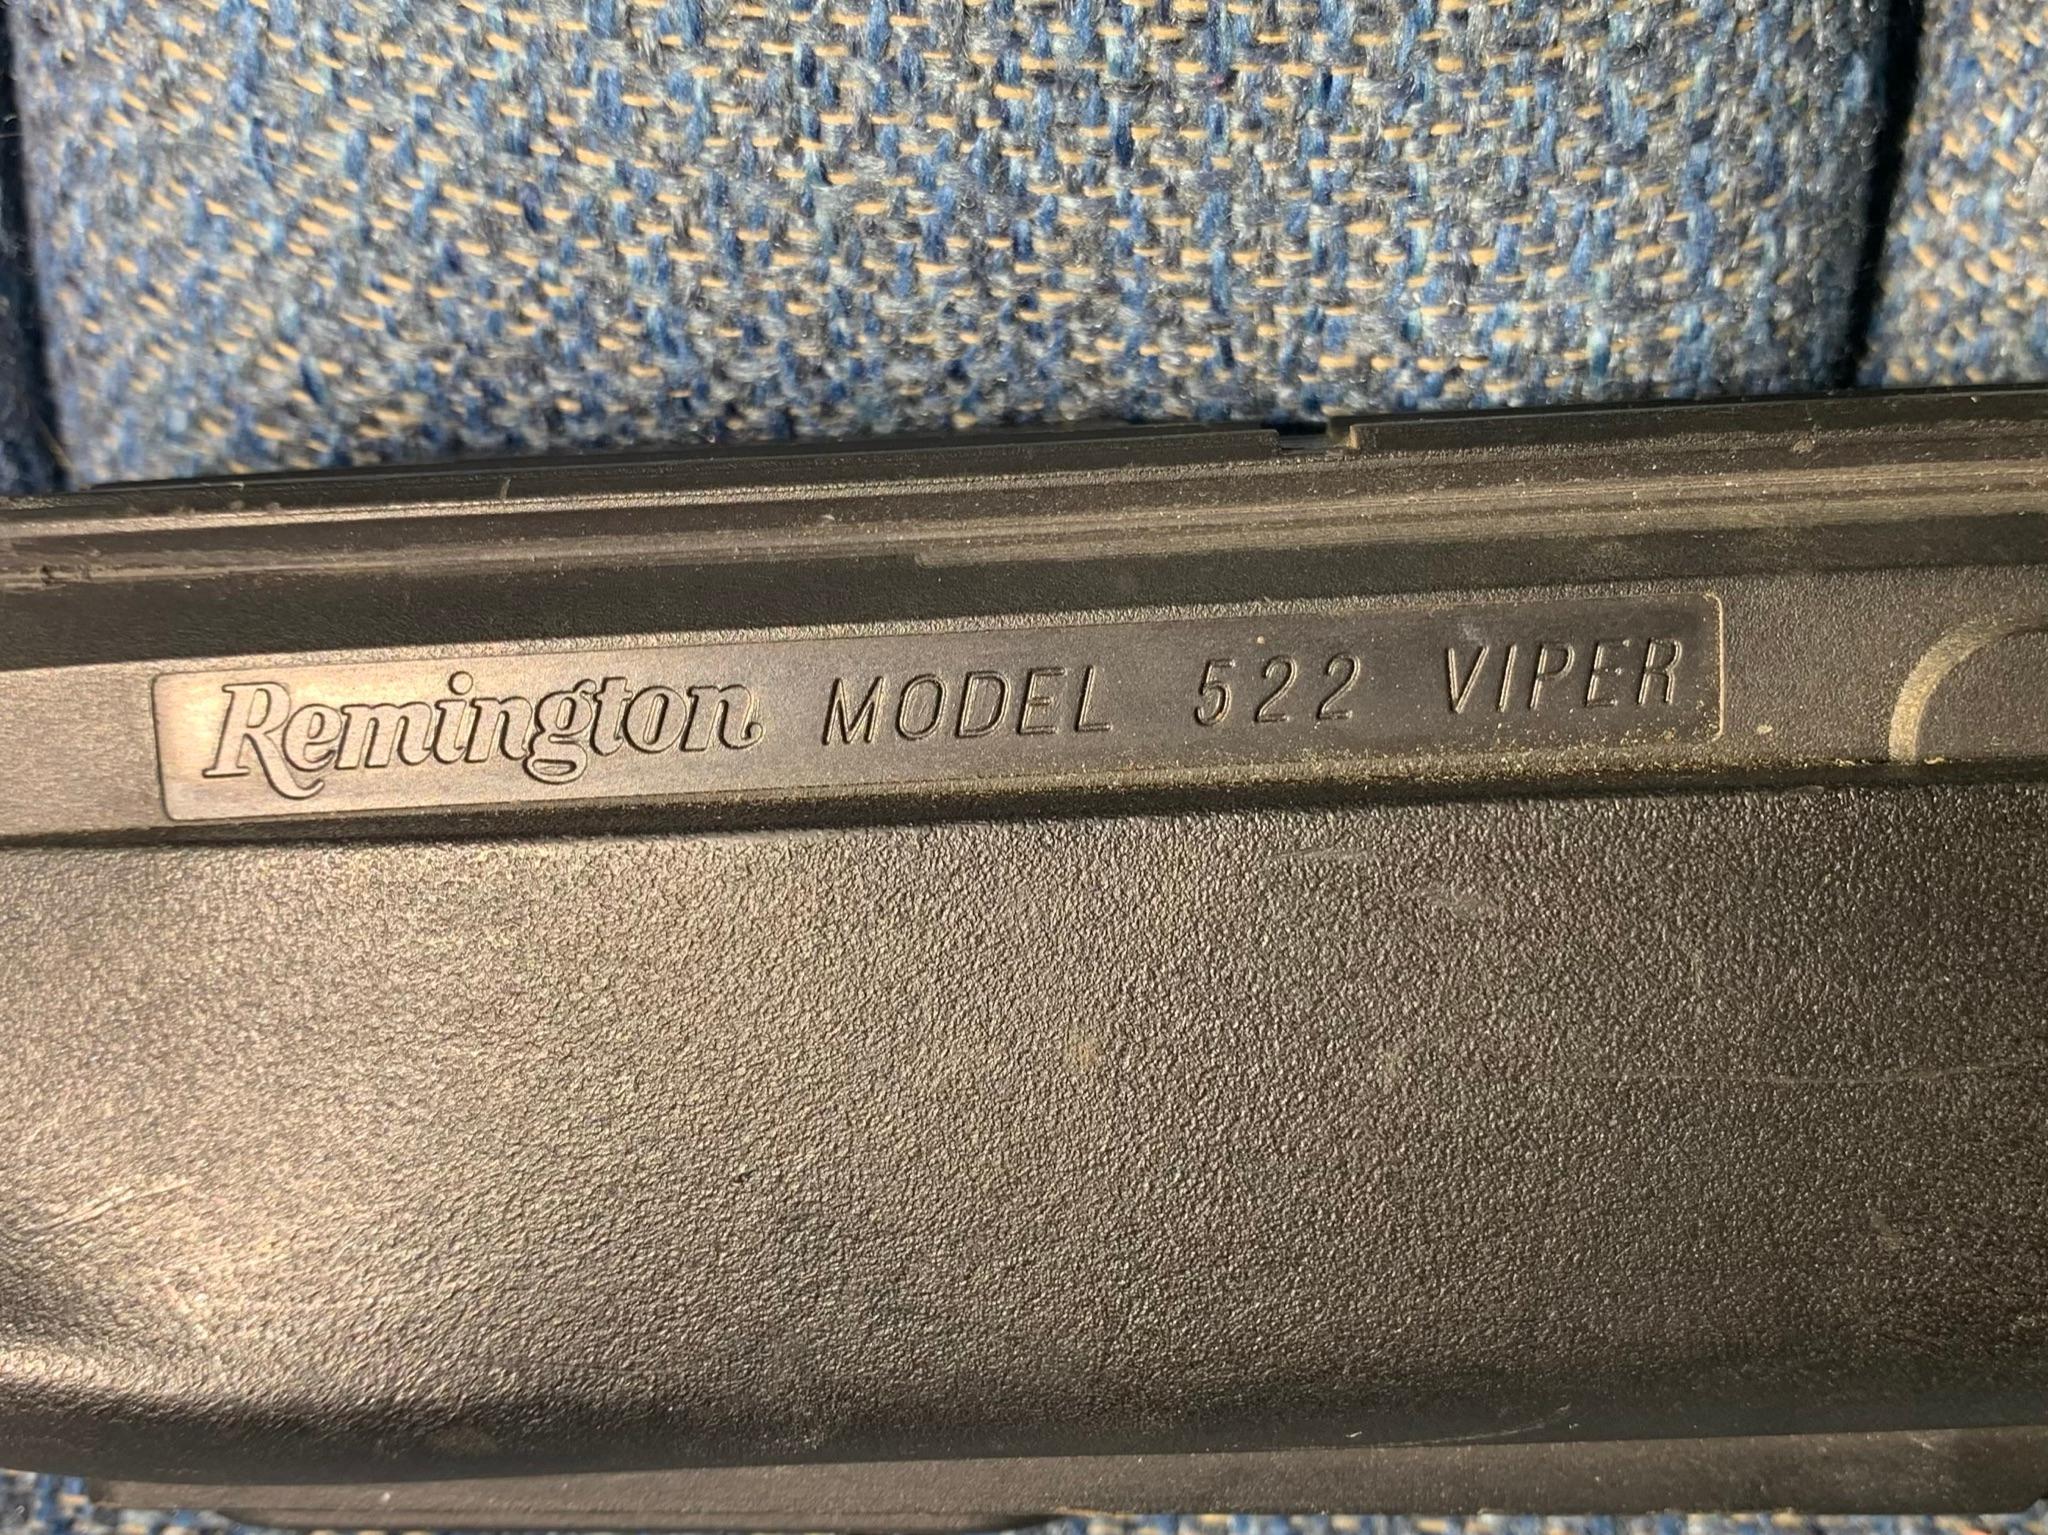 Remington Model 522 Viper 22 Long Rifle with Magazine